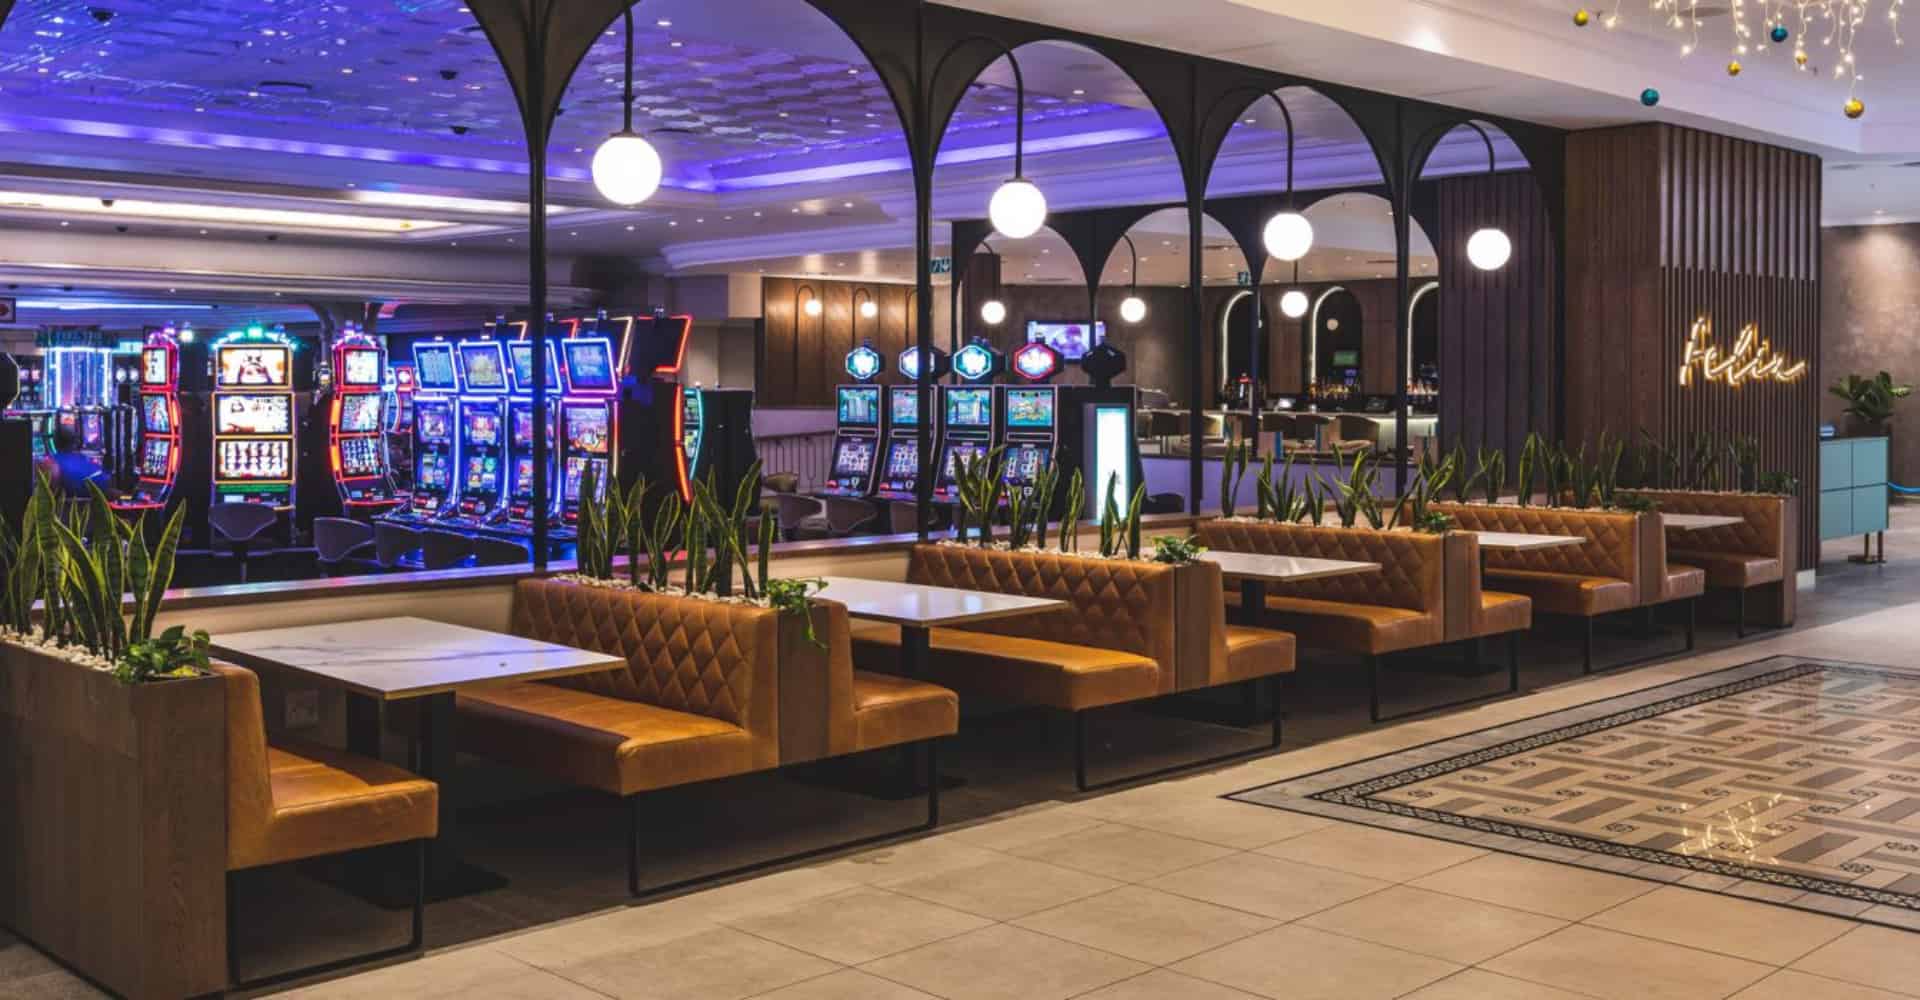 Image Gallery - Hemingways Casino